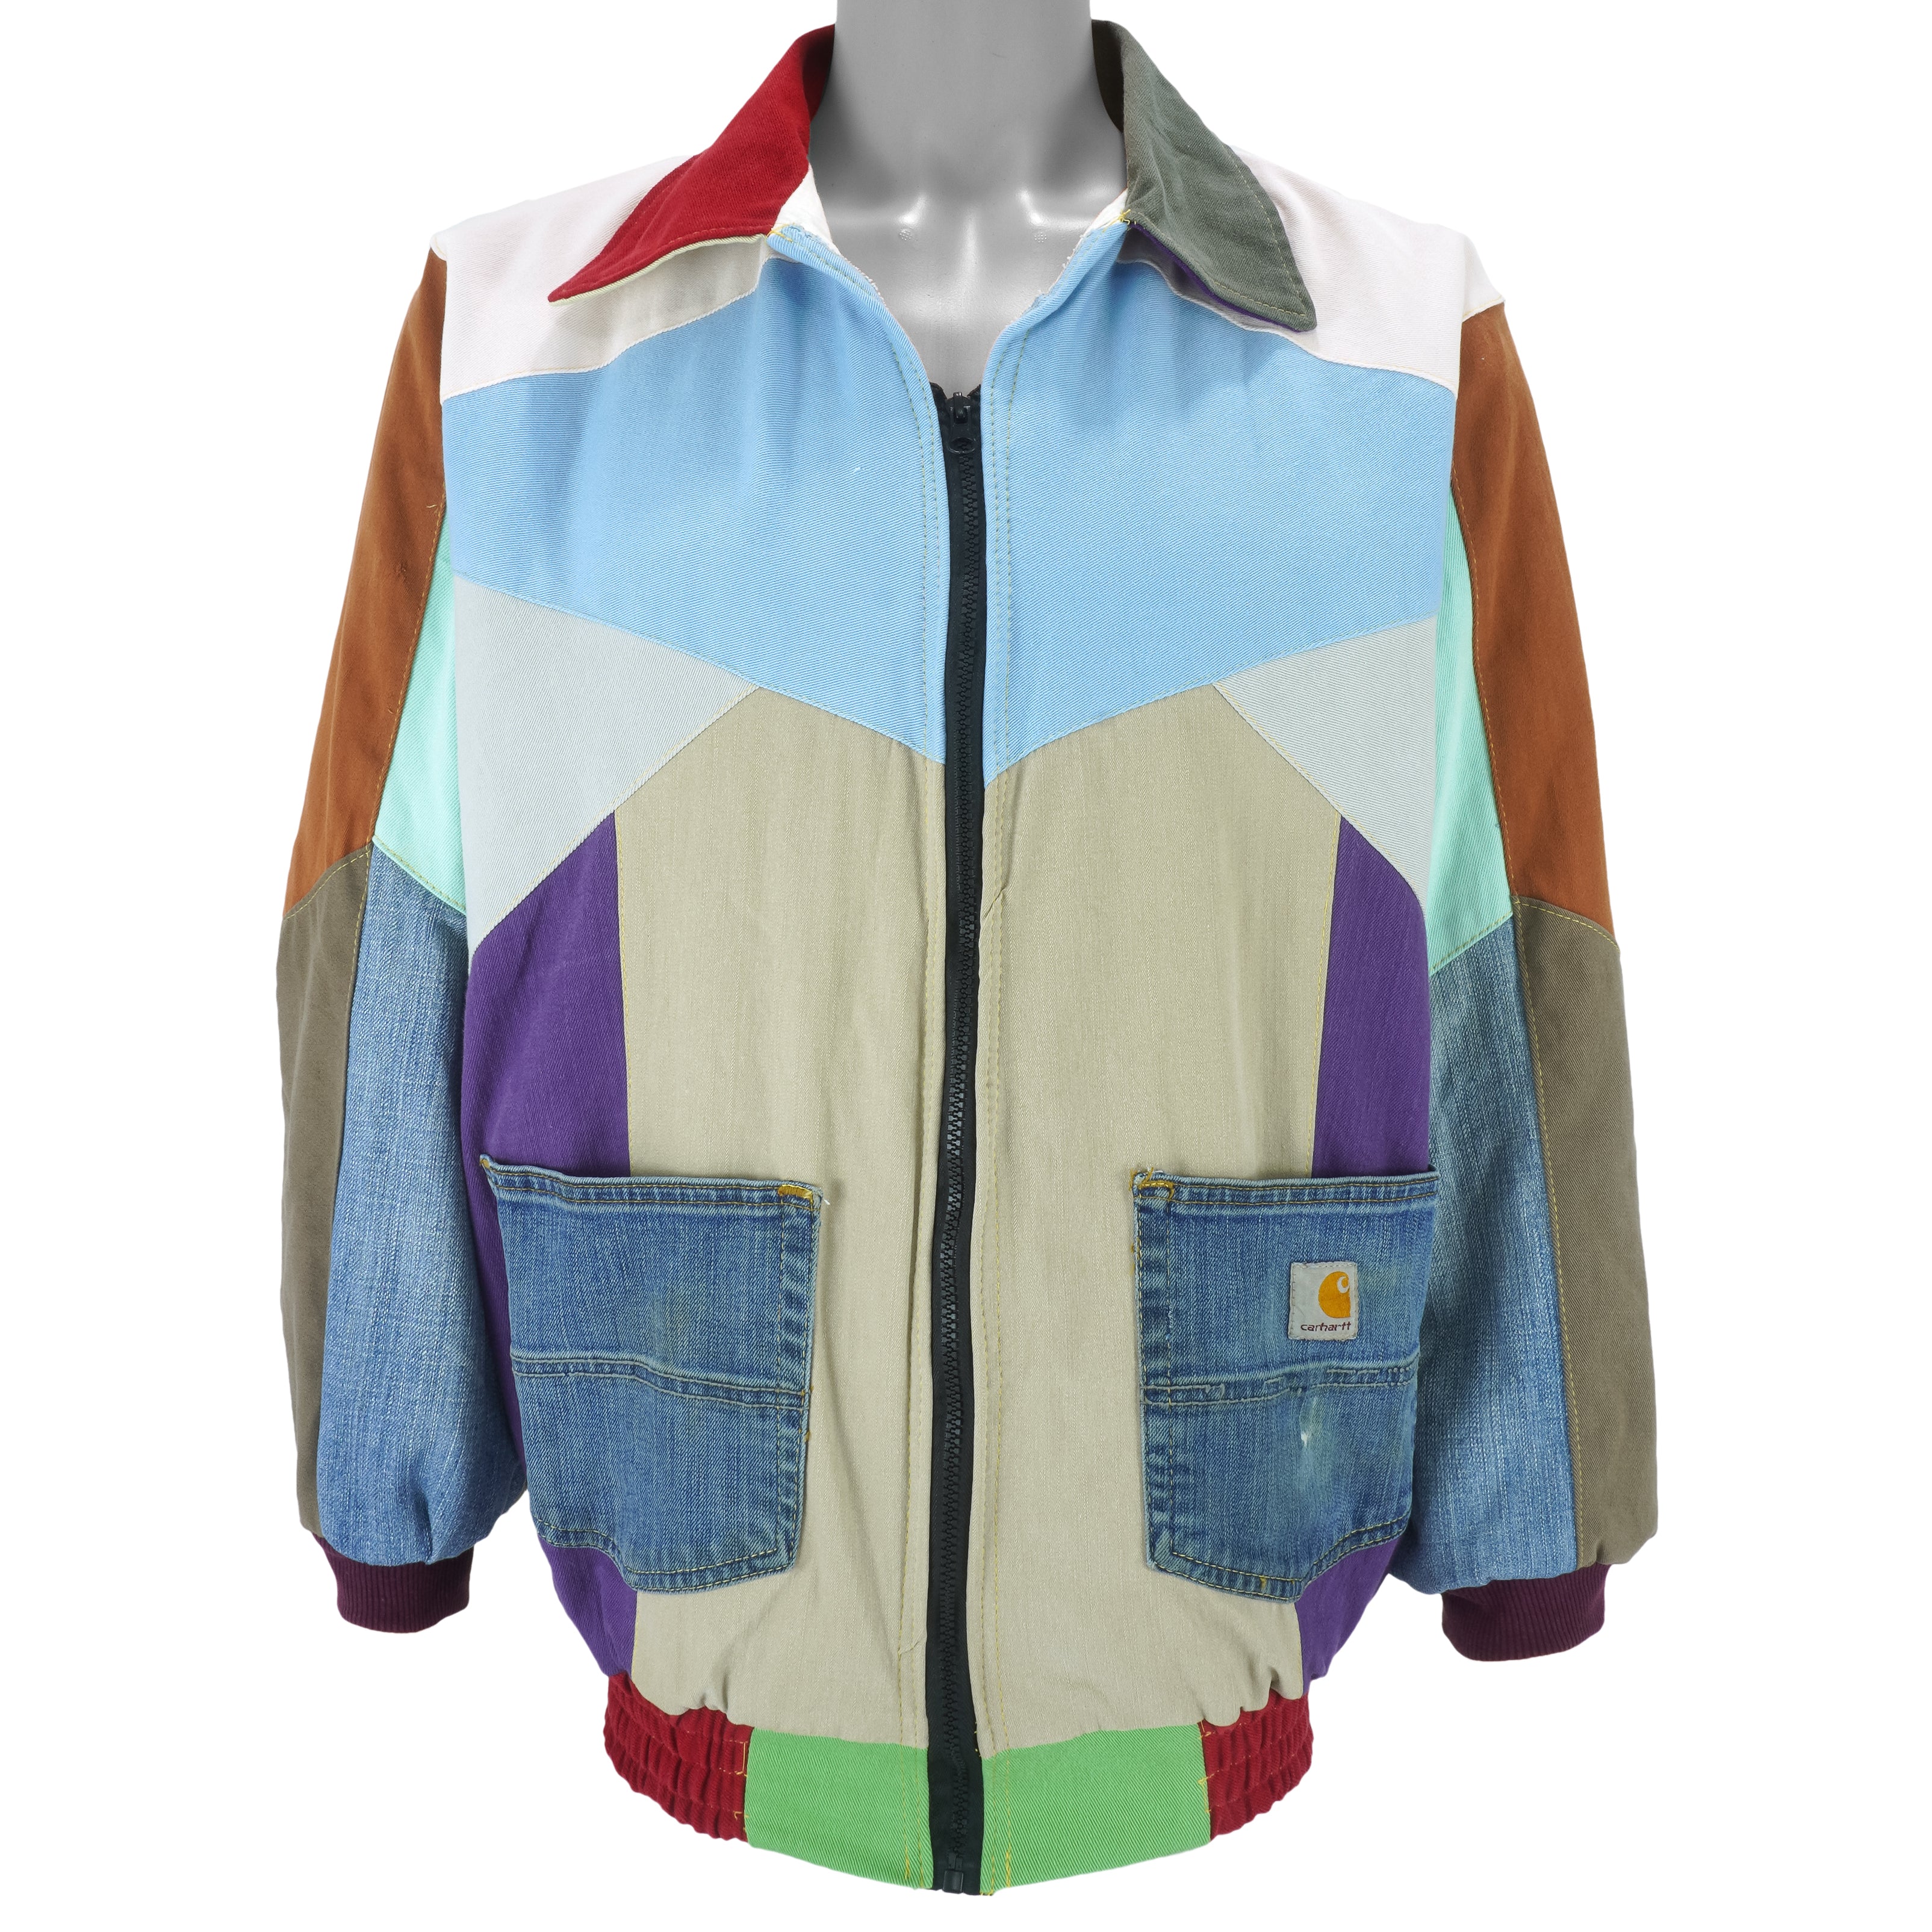 Carhartt Reworked Carhartt colorblock jacket